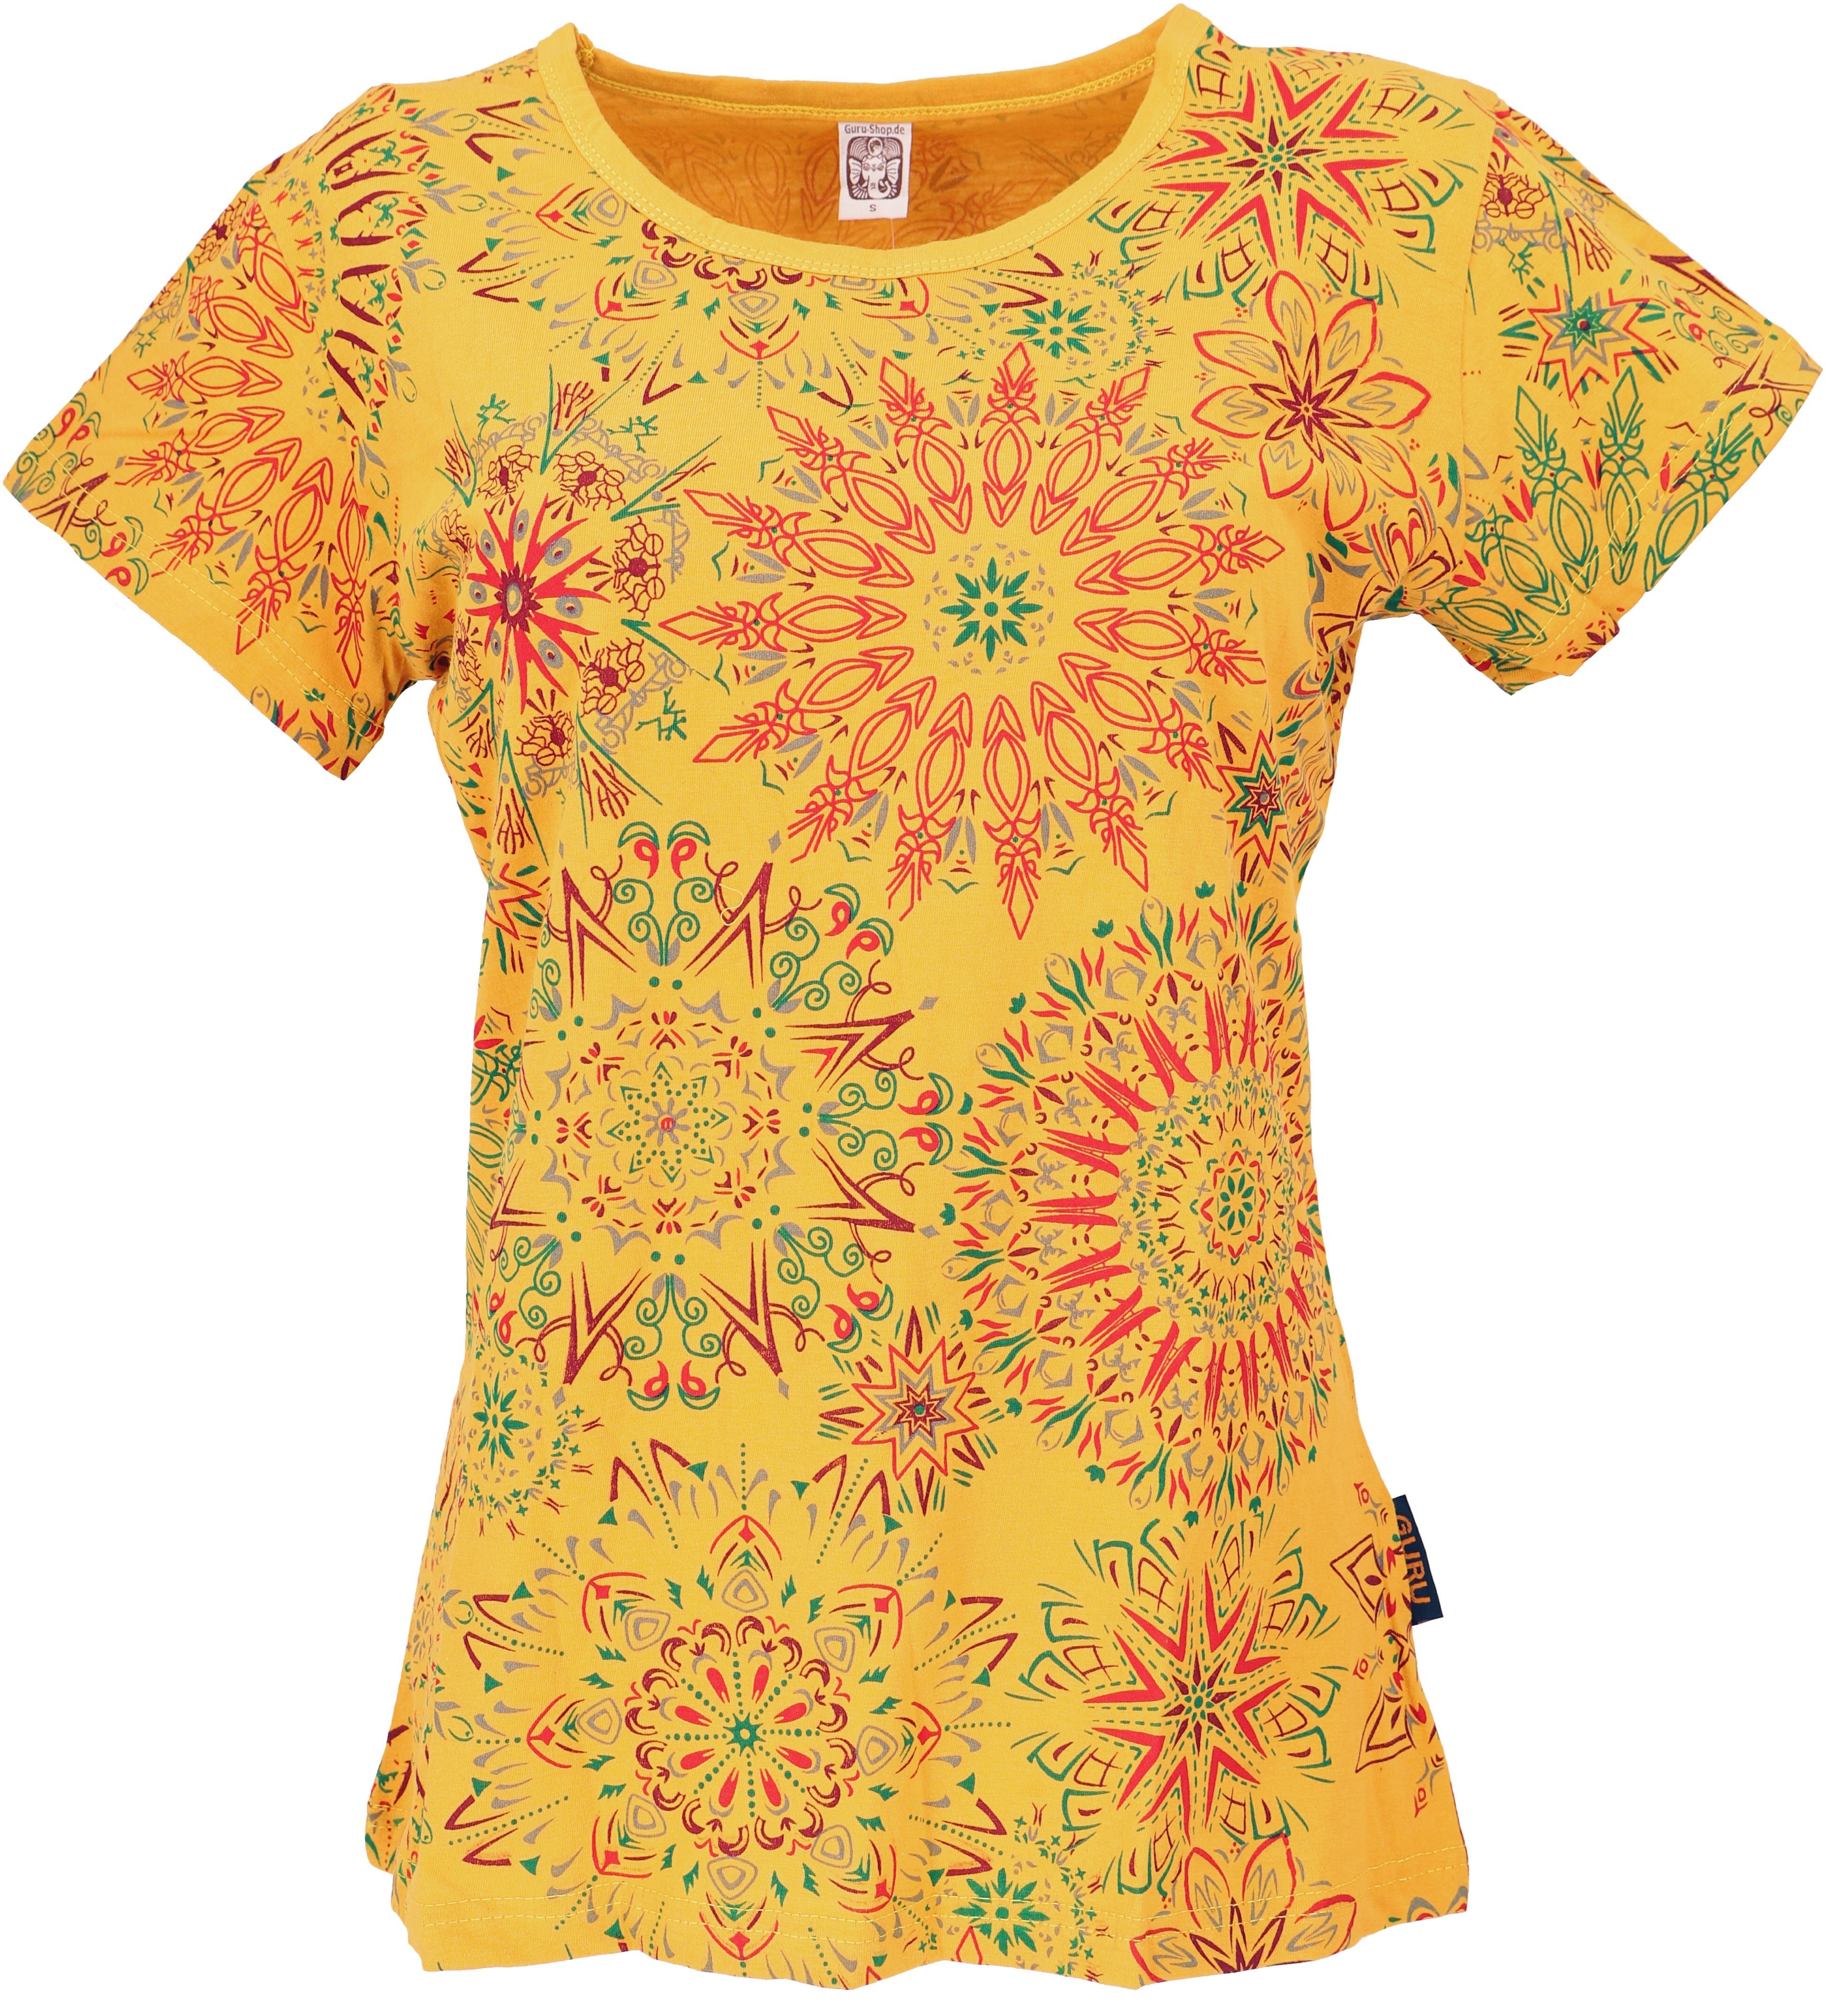 Guru-Shop T-Shirt Boho T-Shirt mit Mandaladruck, bedrucktes.. Festival, Ethno Style, alternative Bekleidung